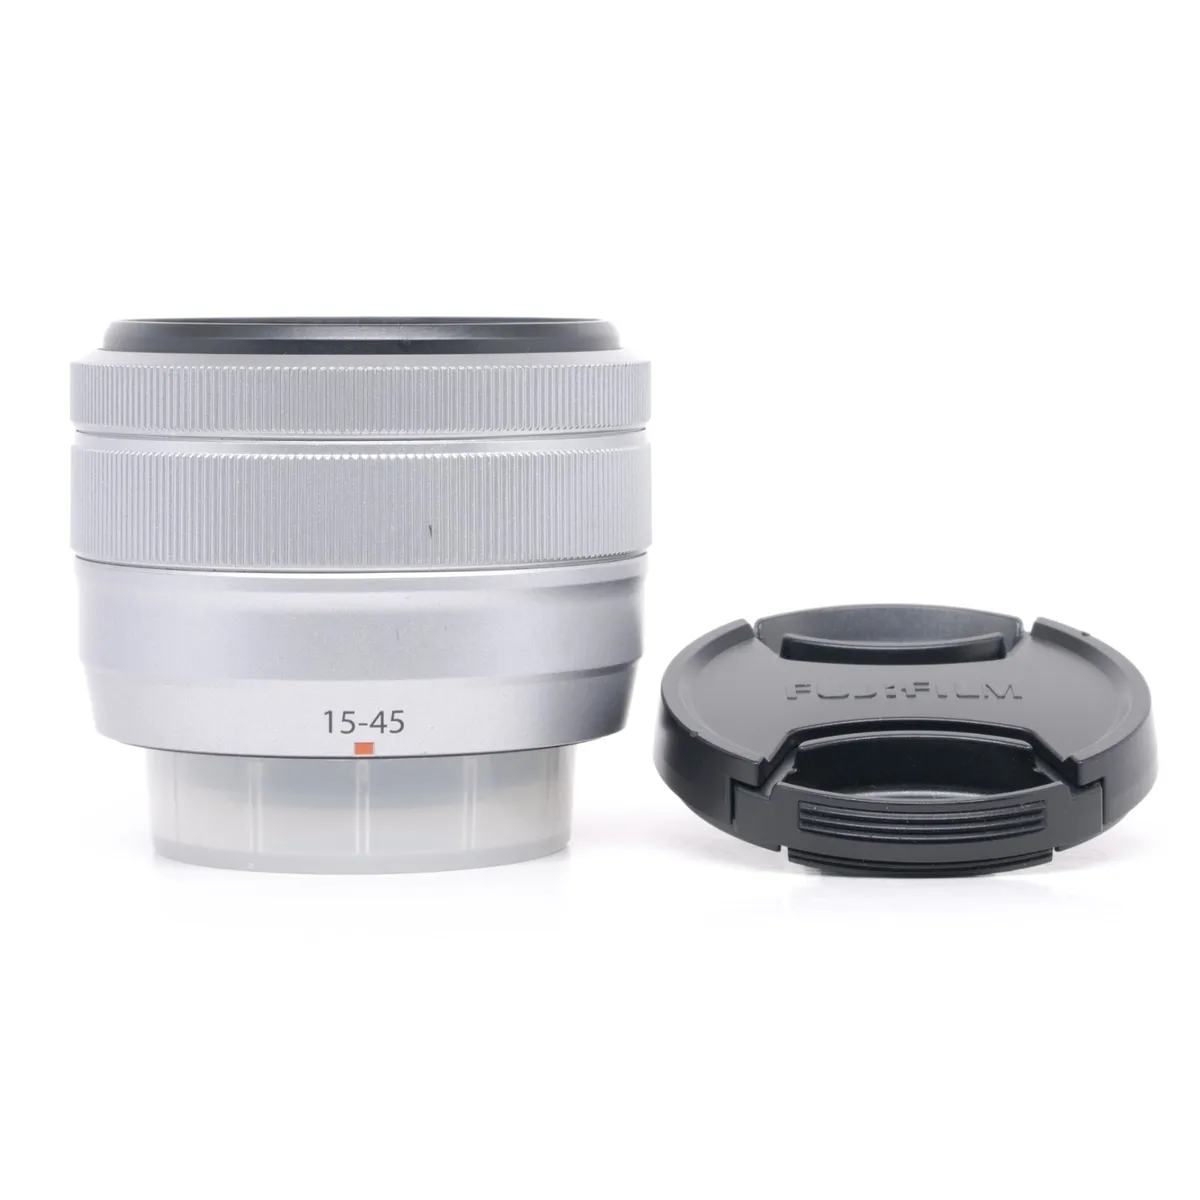 Fujinon Fuji XC 15-45mm f3.5-5.6 OIS PZ lens Fujifilm X Series | eBay